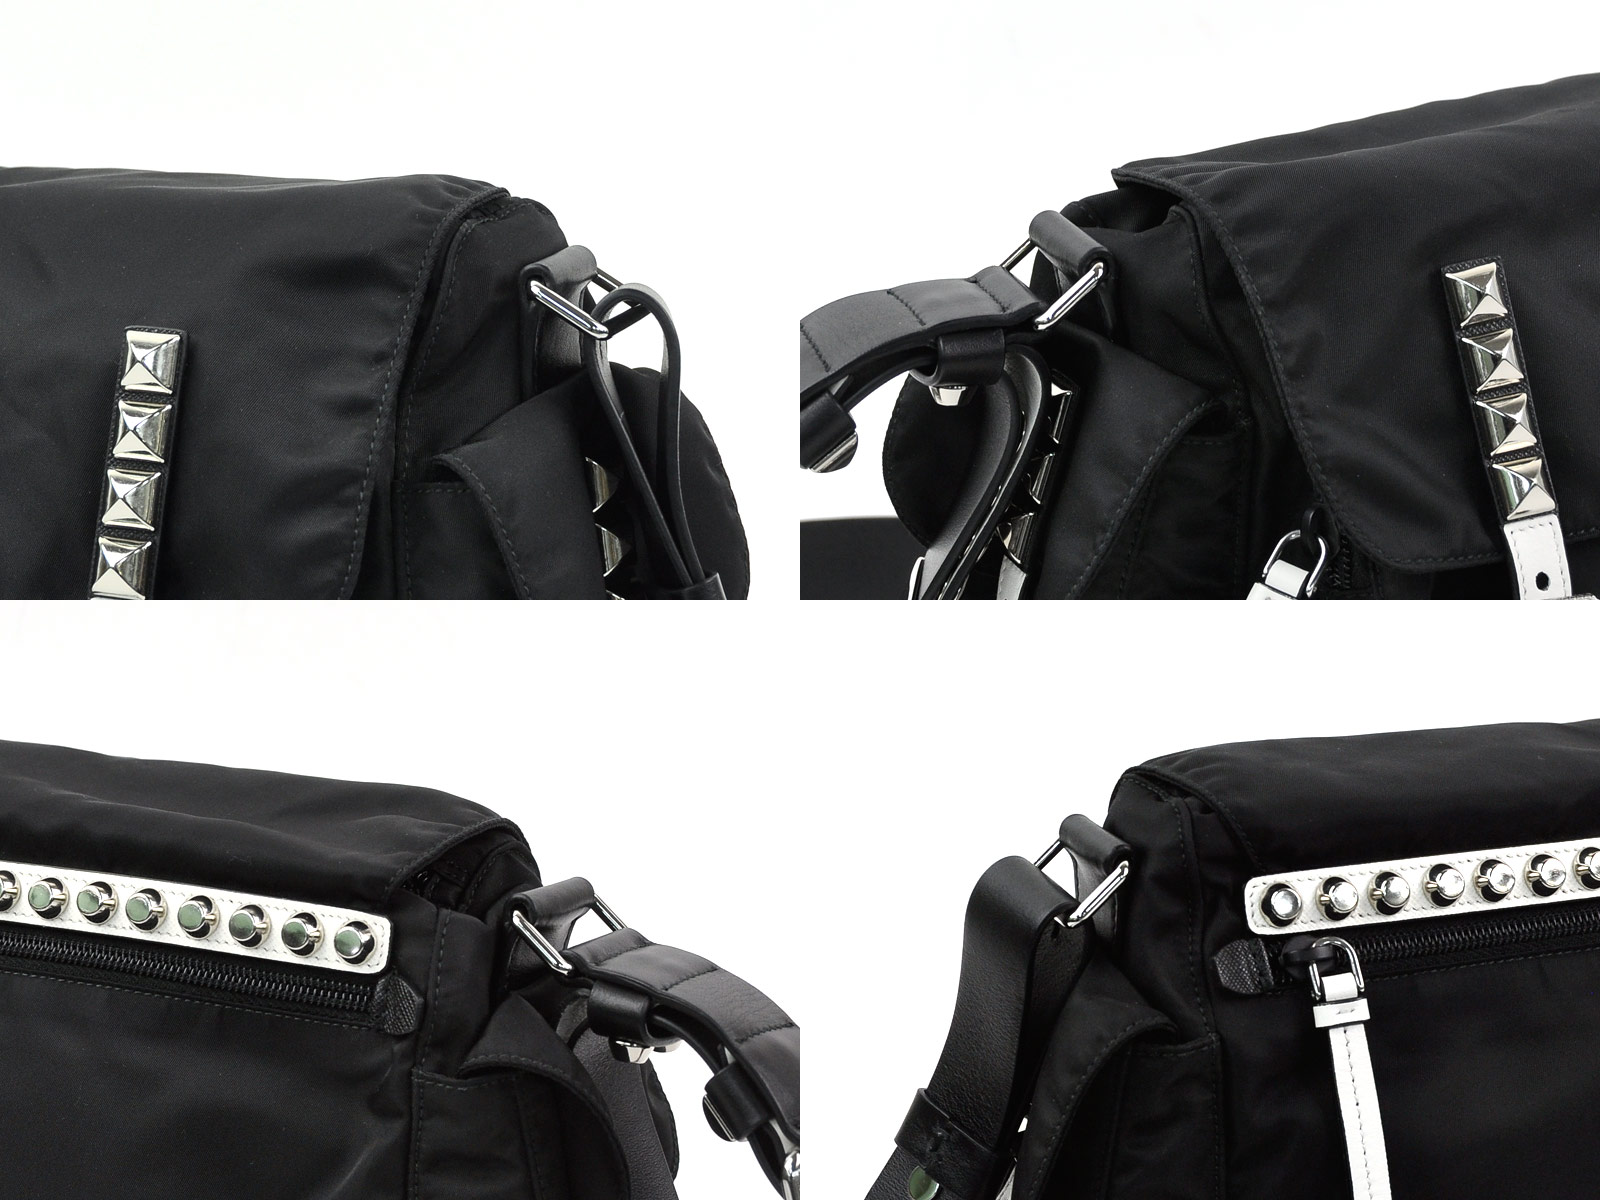 Auth PRADA Studs Shoulder Bag Black/White Nylon/Leather - 97079 | eBay